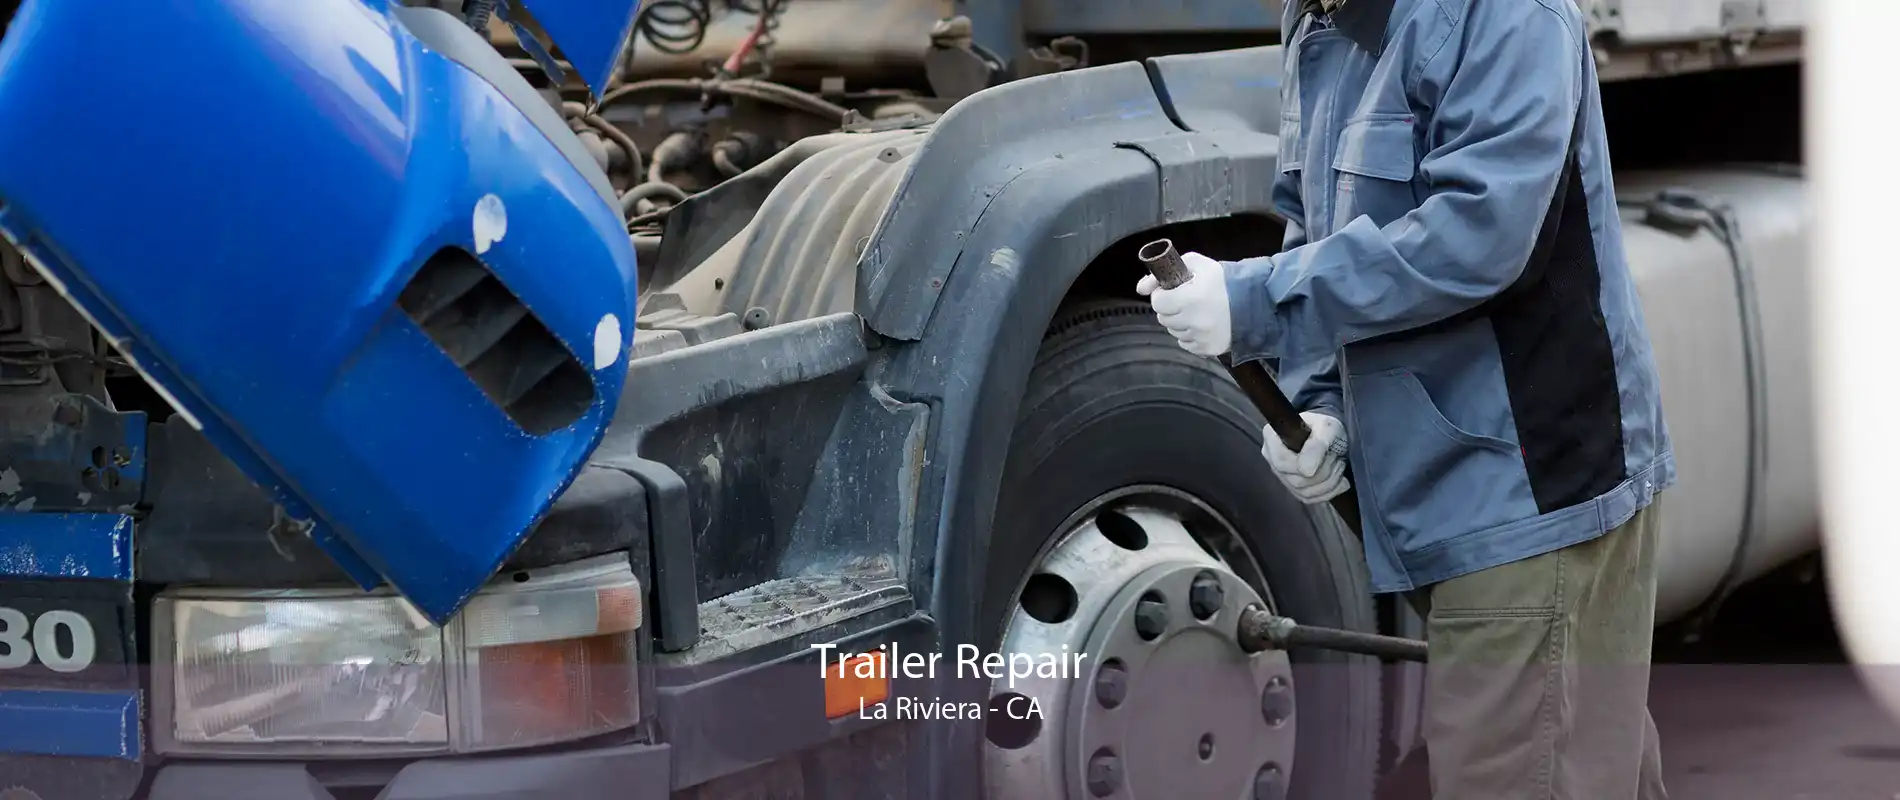 Trailer Repair La Riviera - CA